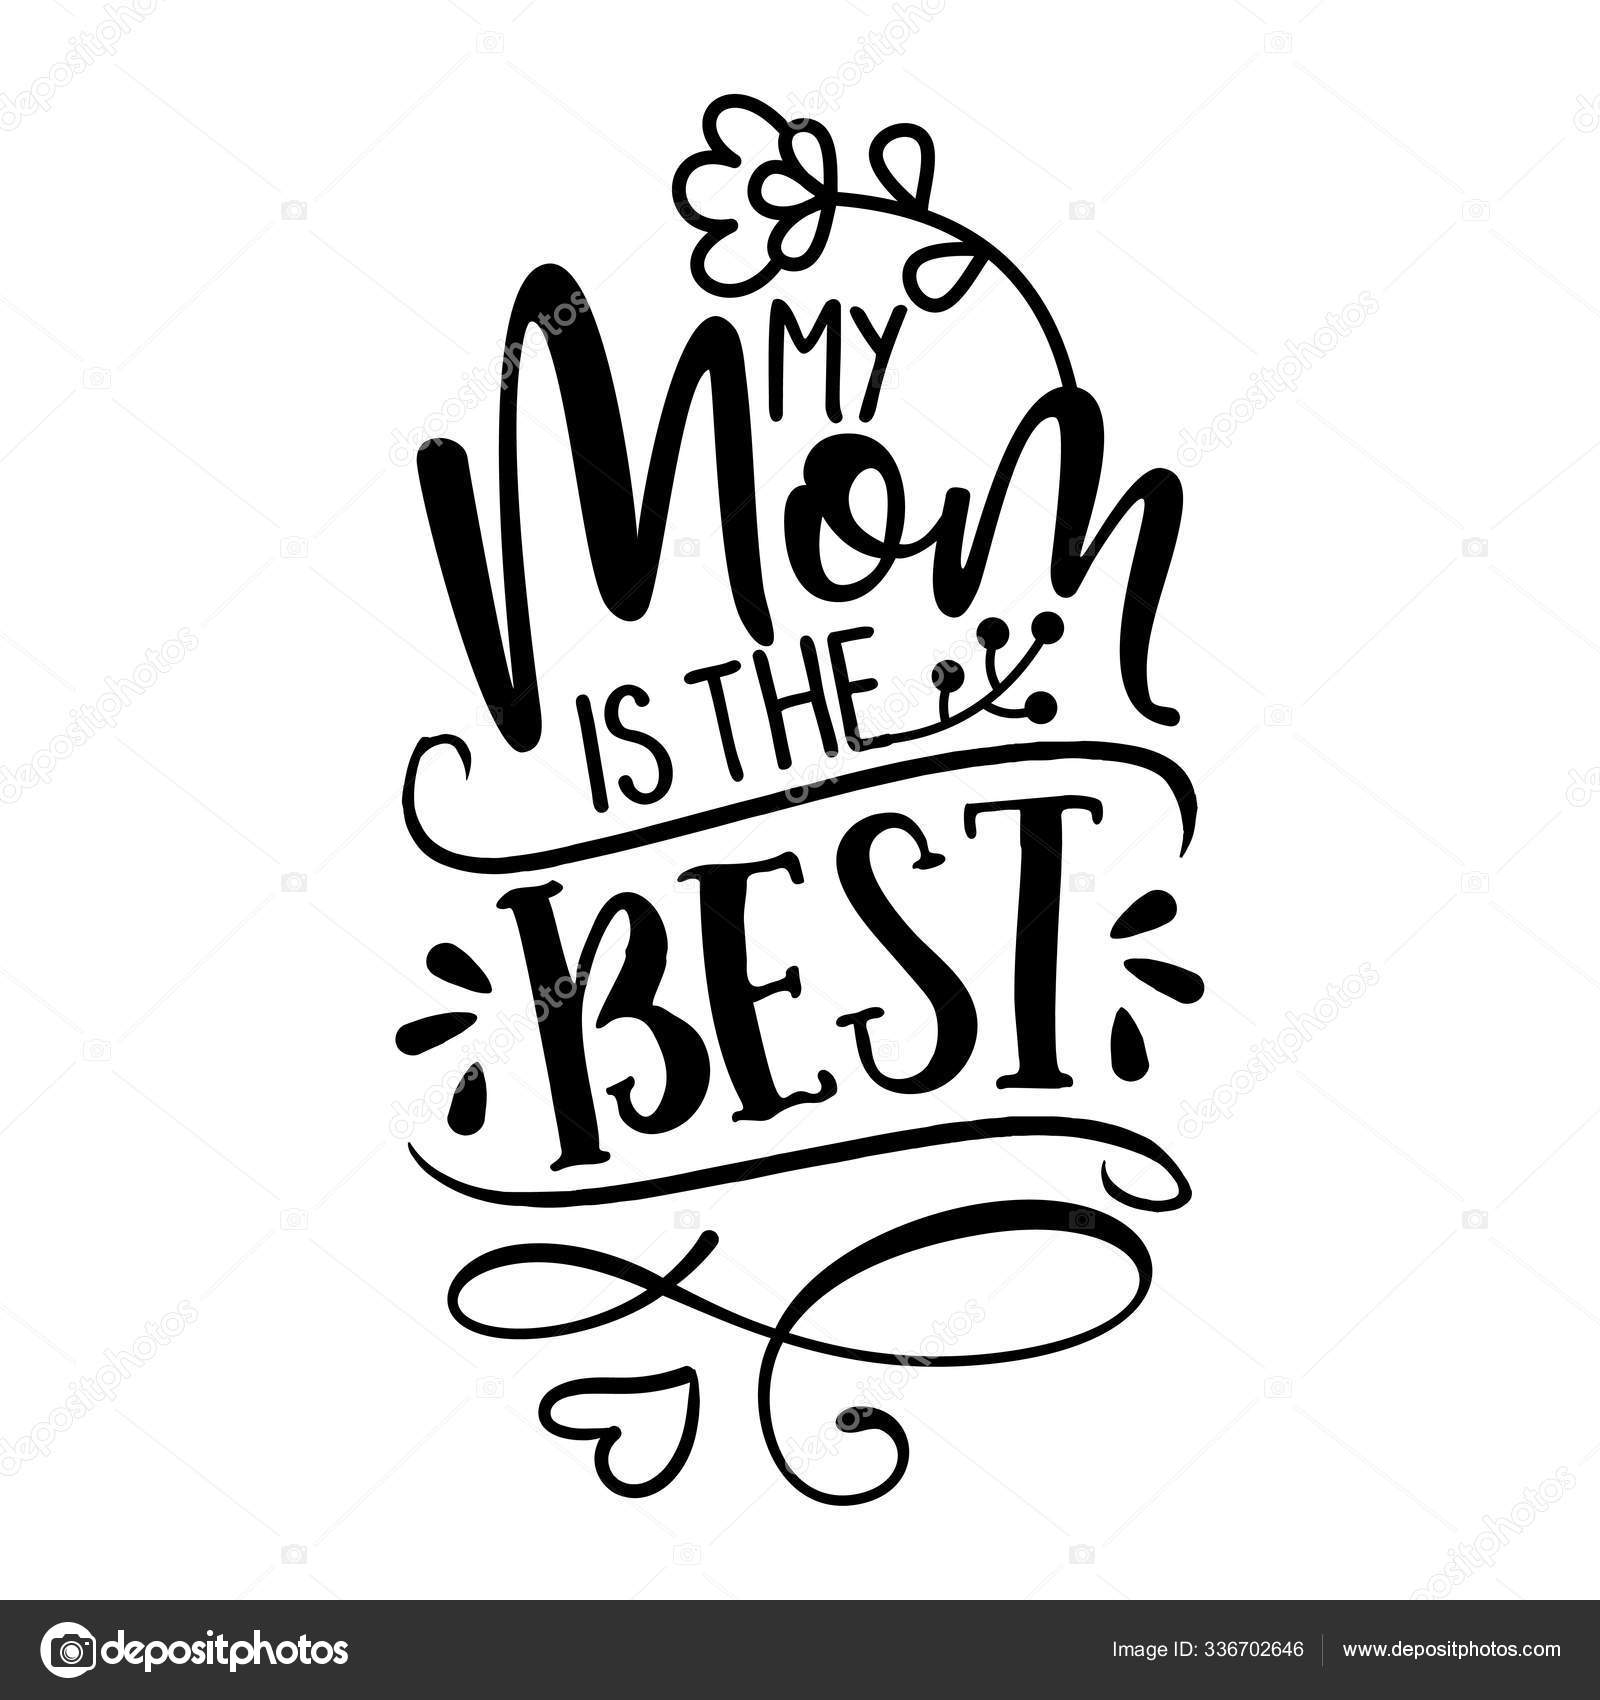 https://st3.depositphotos.com/18064032/33670/v/1600/depositphotos_336702646-stock-illustration-mom-best-happy-mothers-day.jpg